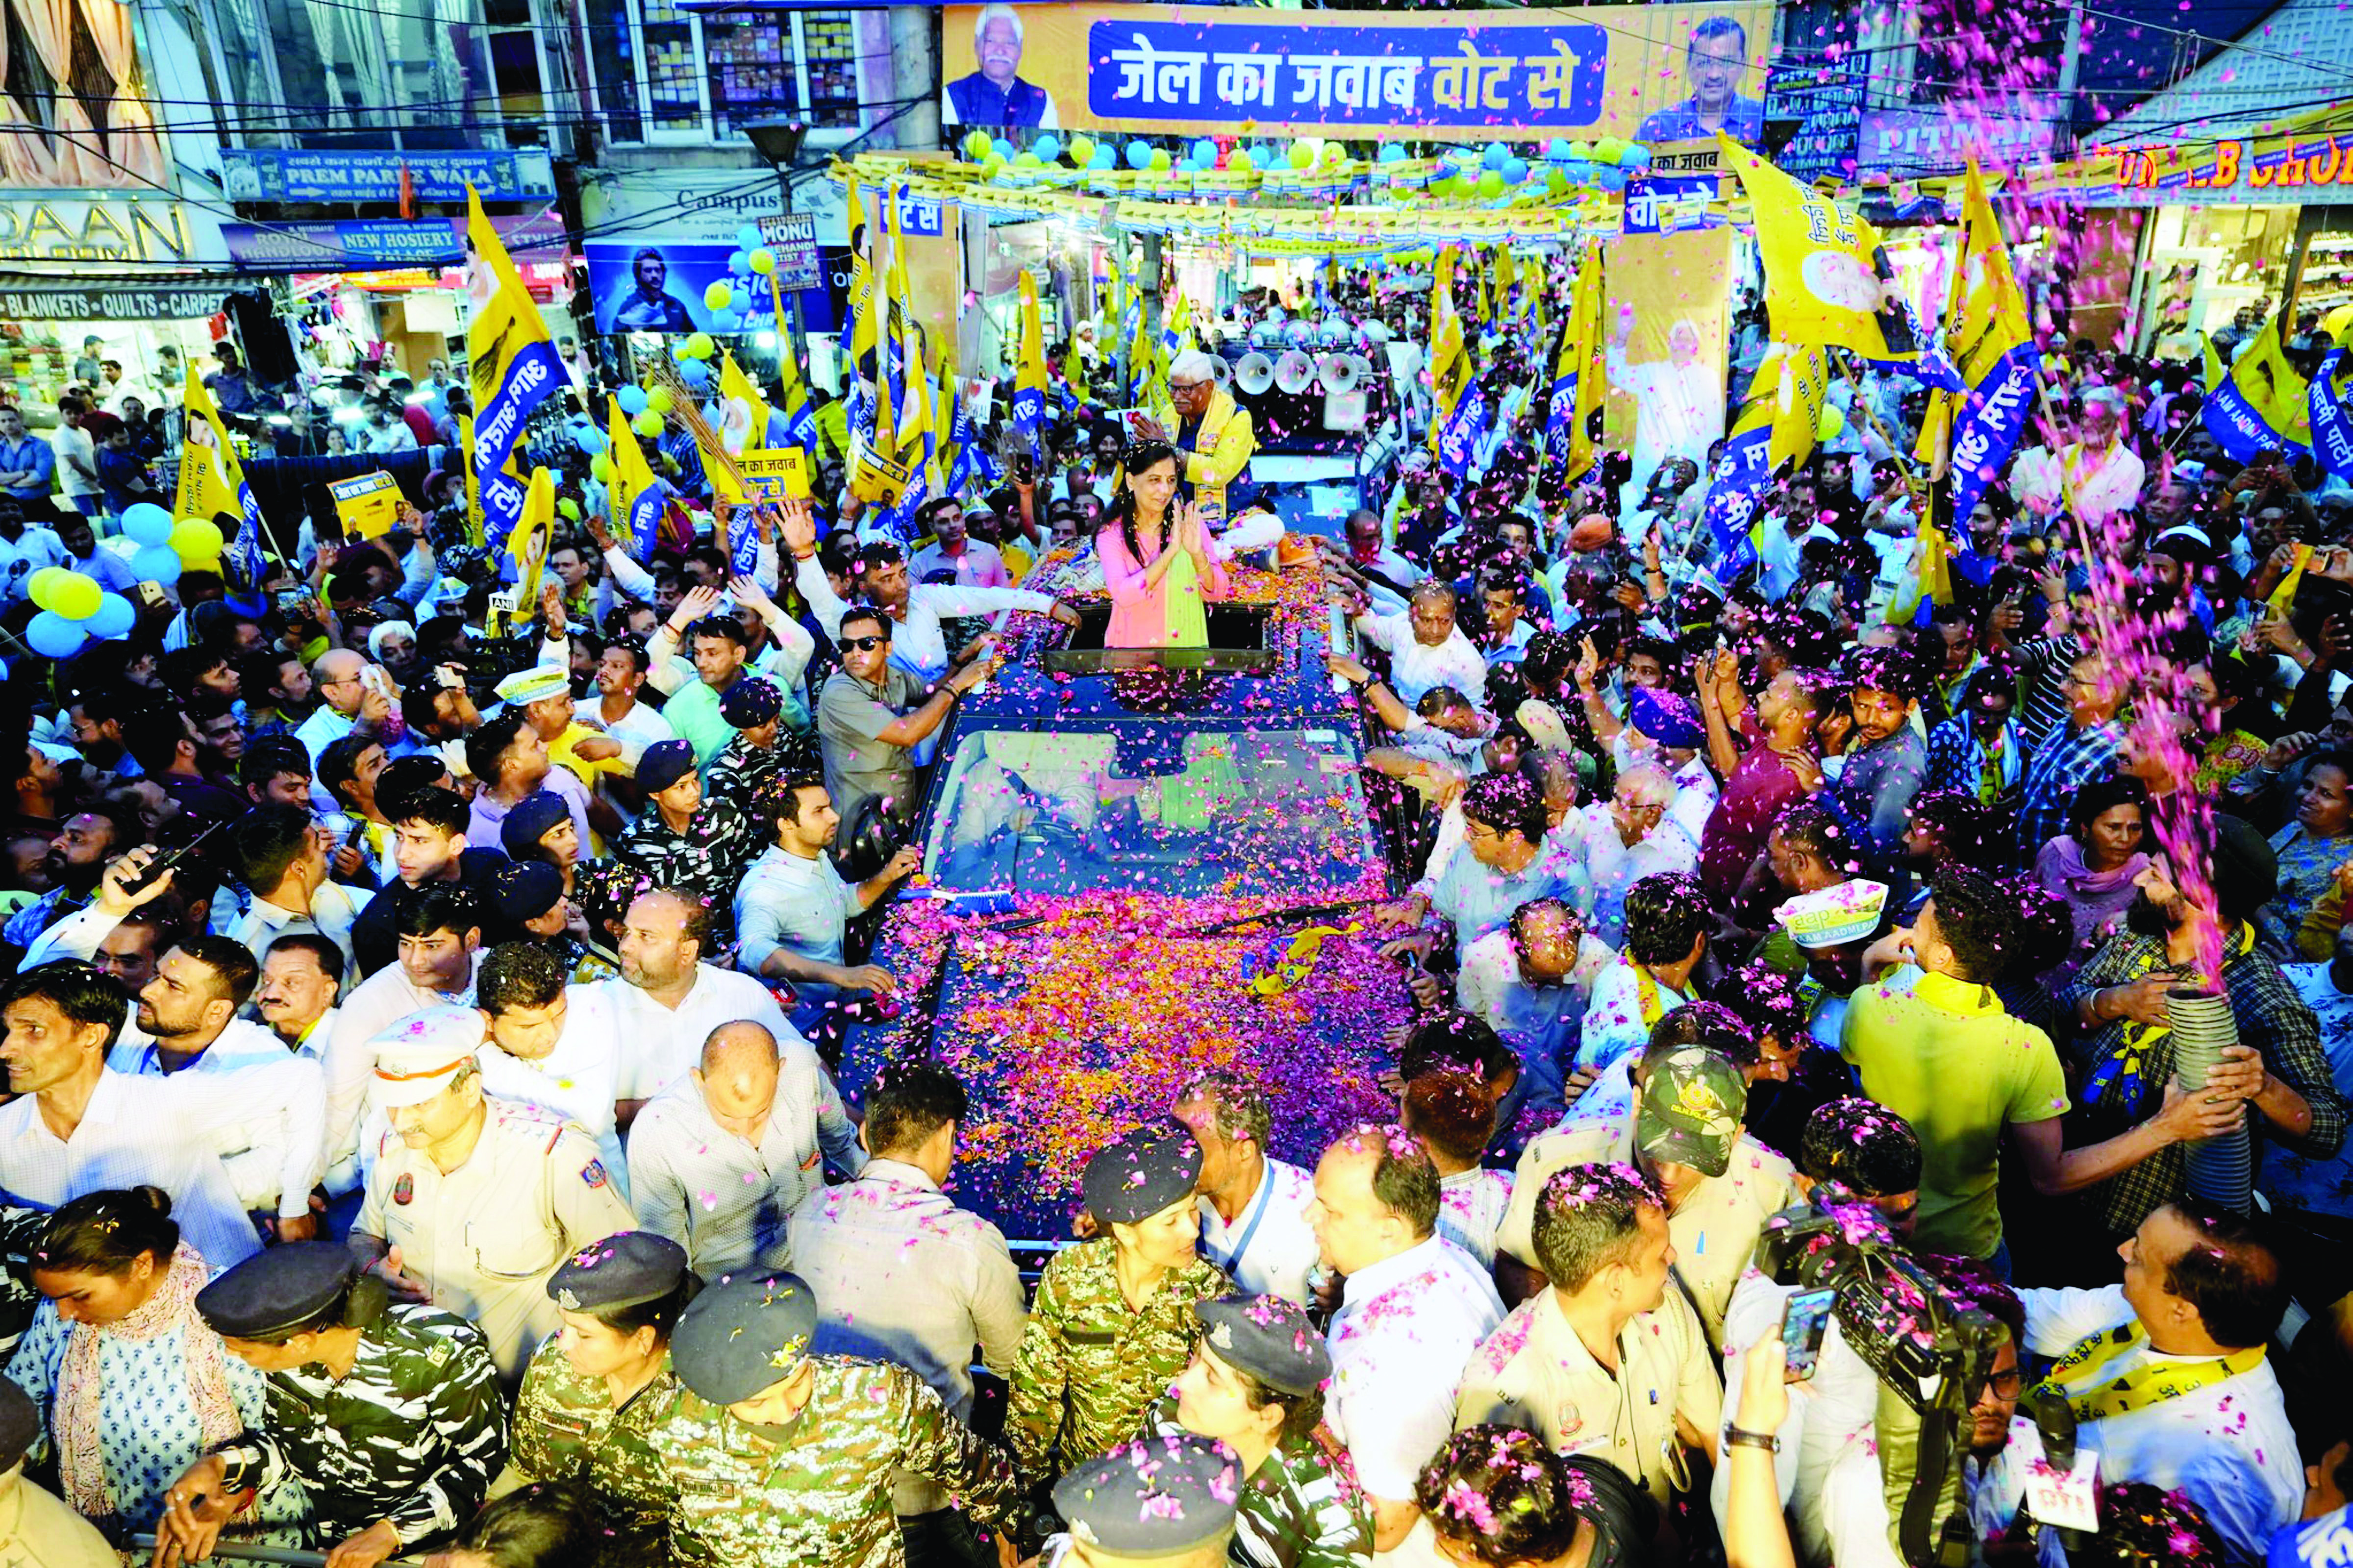 Massive support for AAP as Sunita Kejriwal leads roadshow in W Delhi